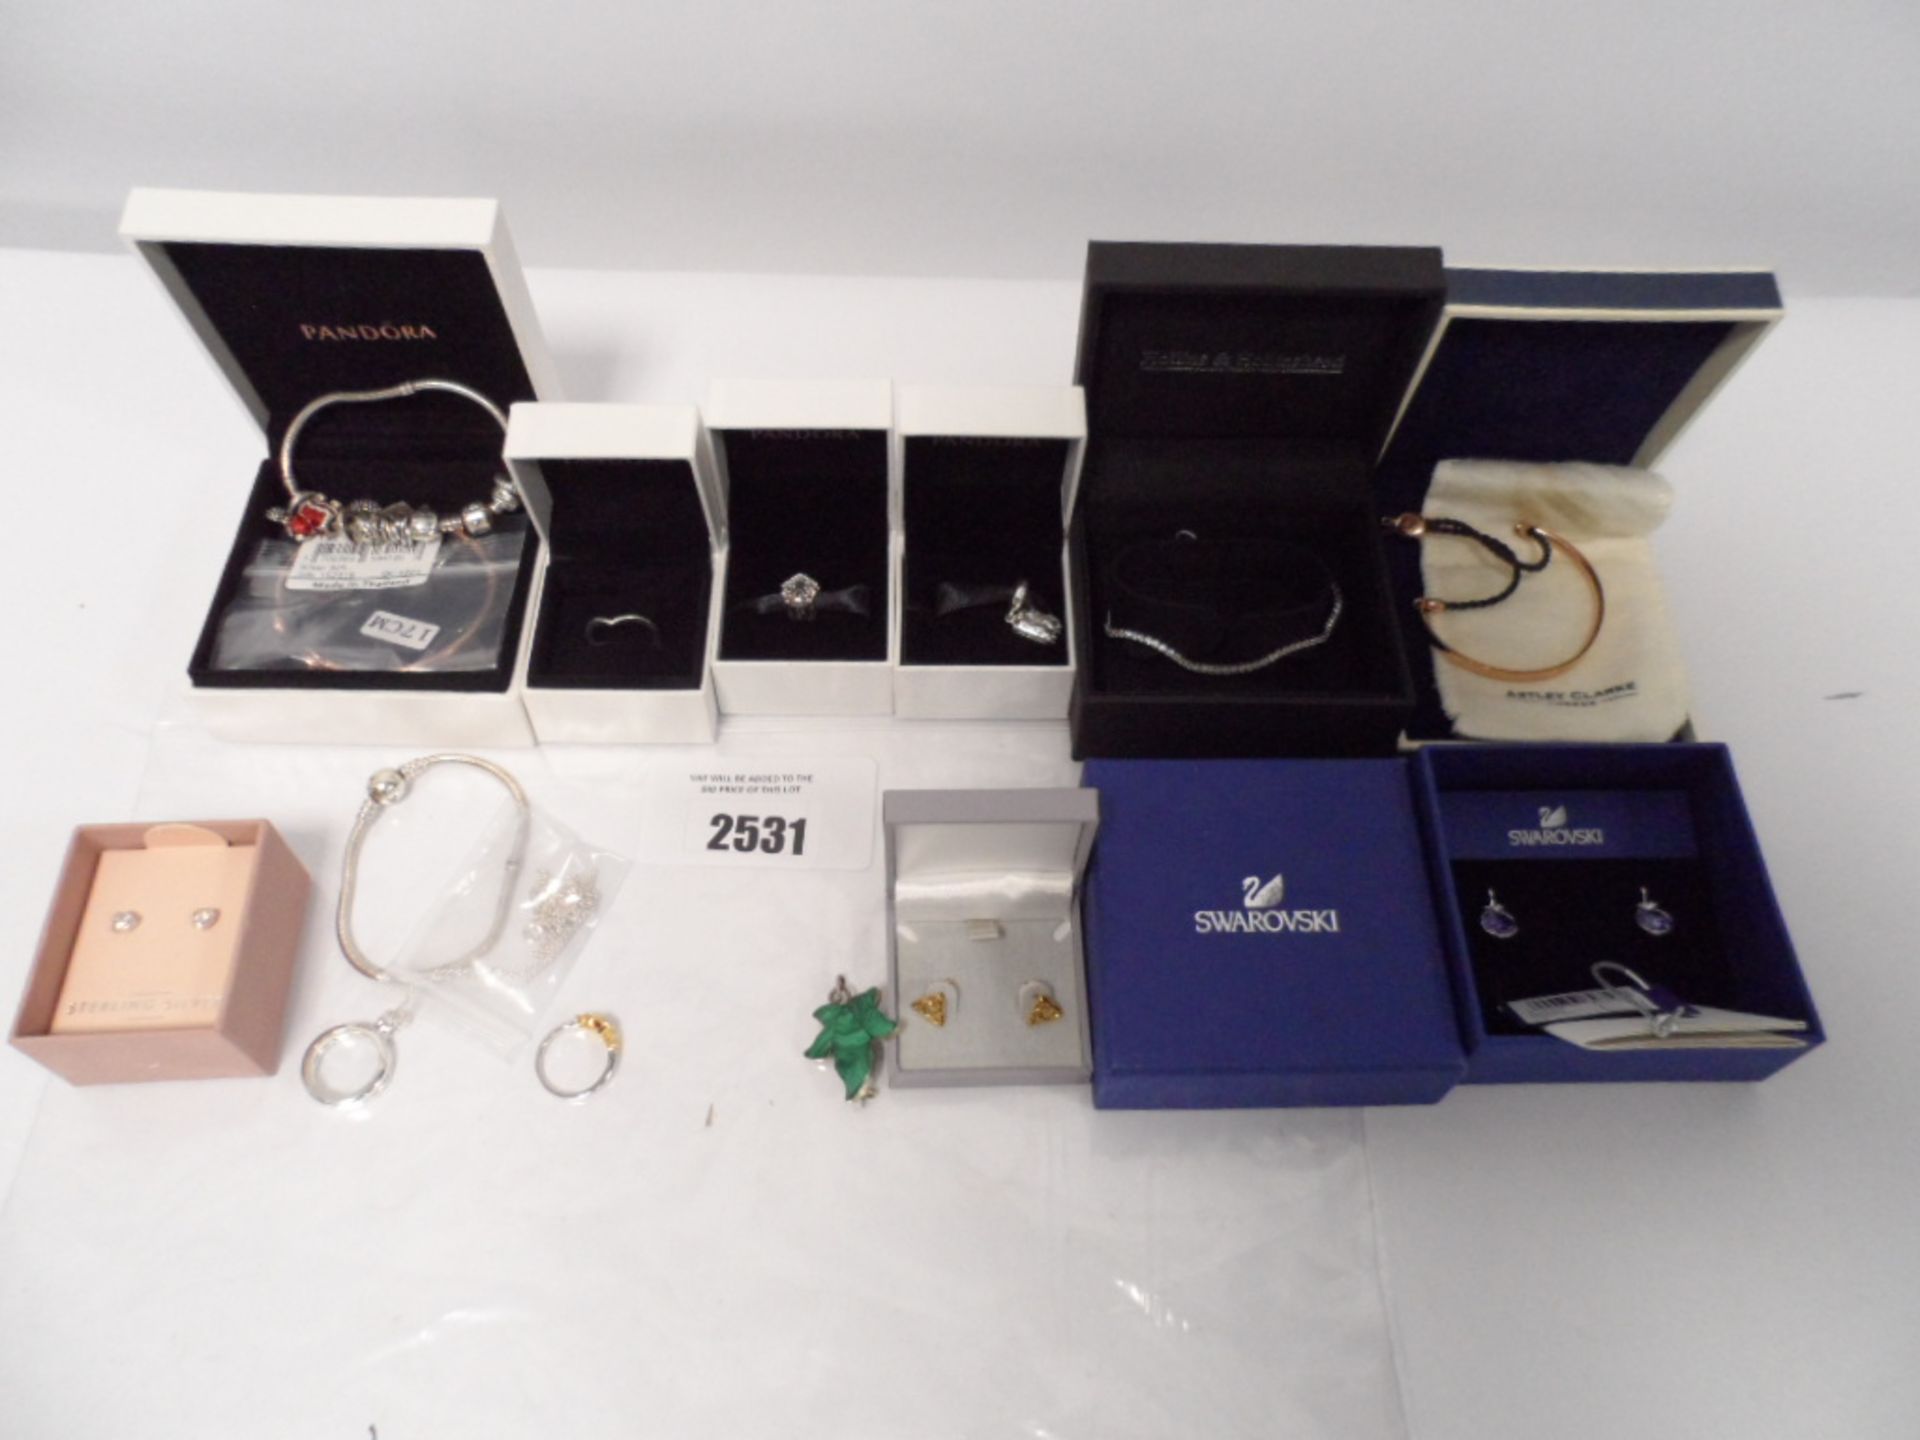 Bag of jewellery items to include charms, bracelets and earrings by Pandora, Swarovski, etc